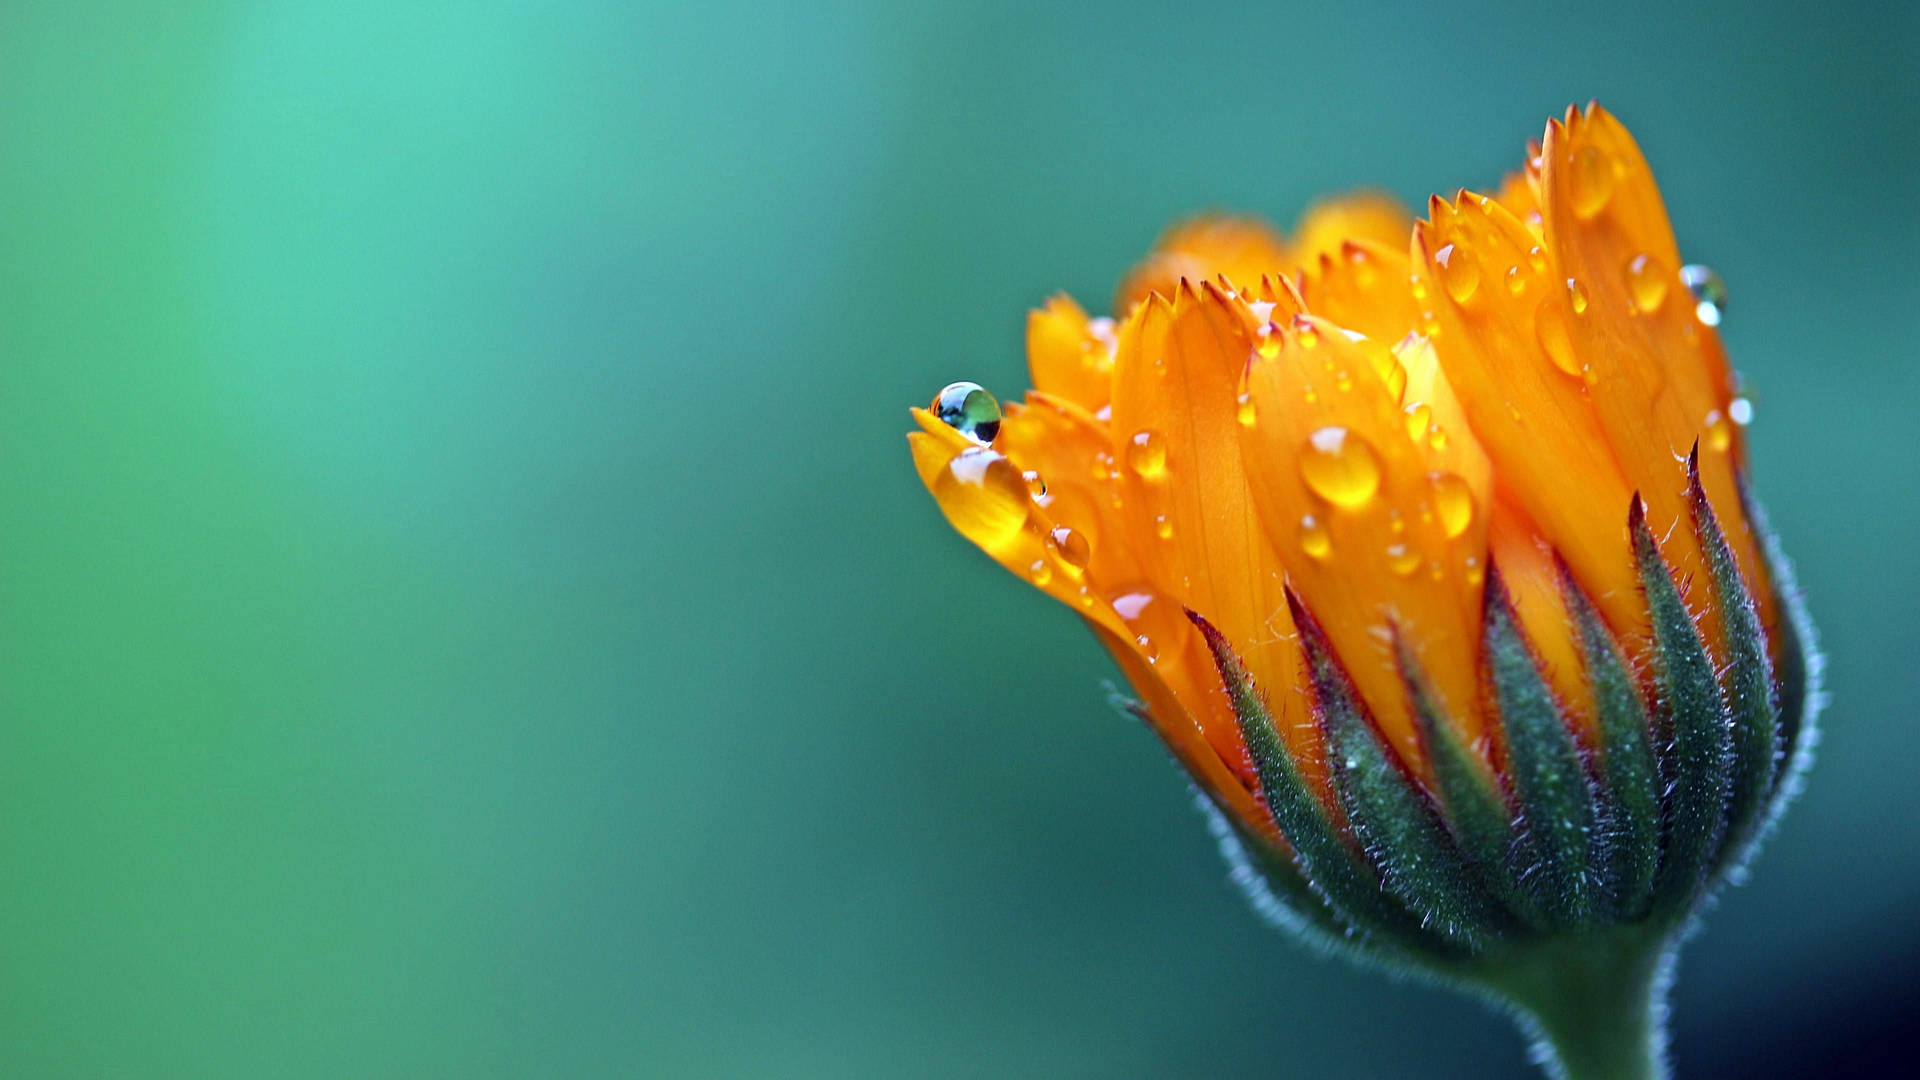 A Beautiful Marigold Flower in Macro Photgraphy Wallpaper